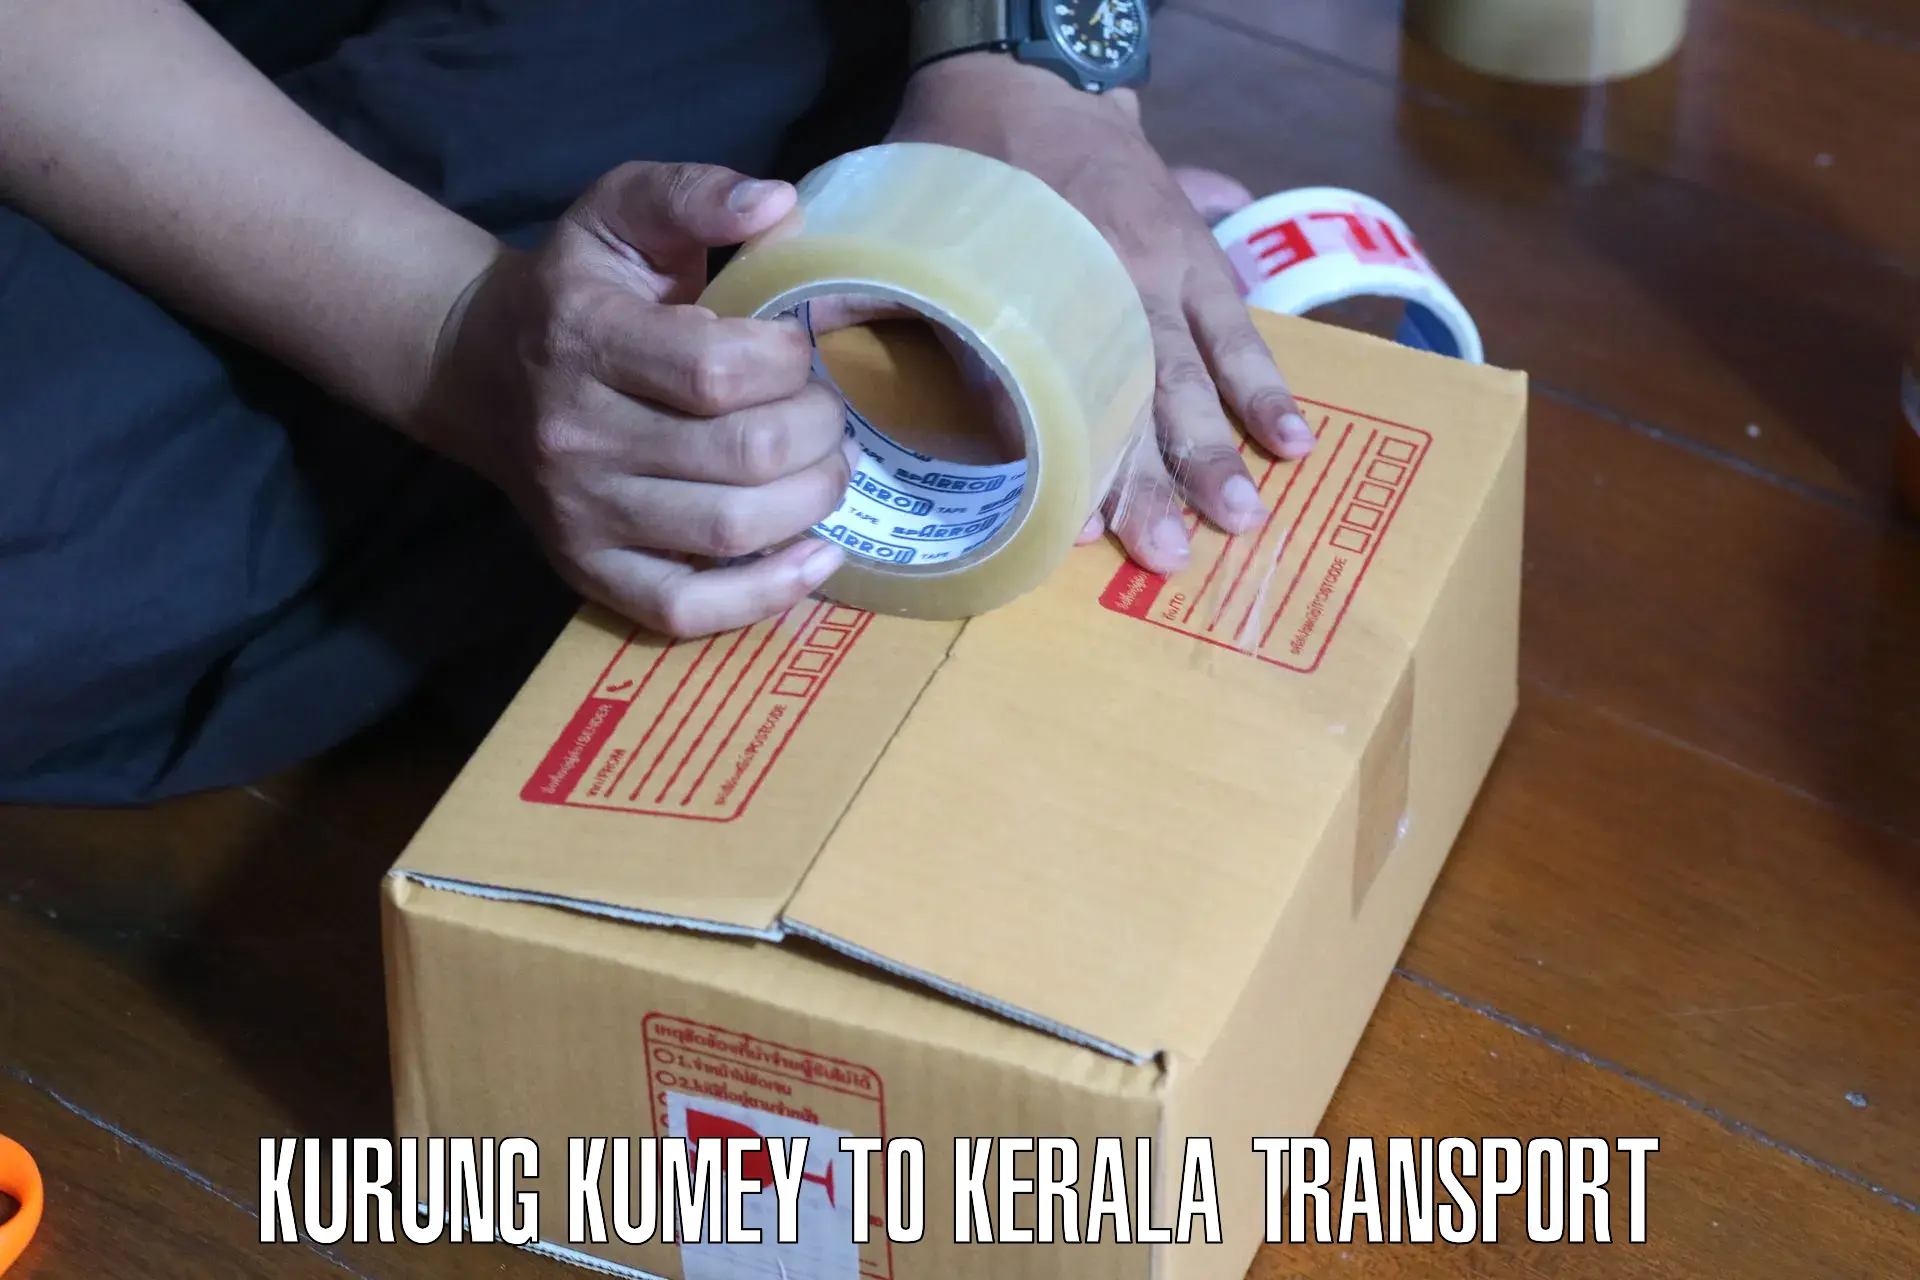 Transport bike from one state to another Kurung Kumey to Kanjiramattom